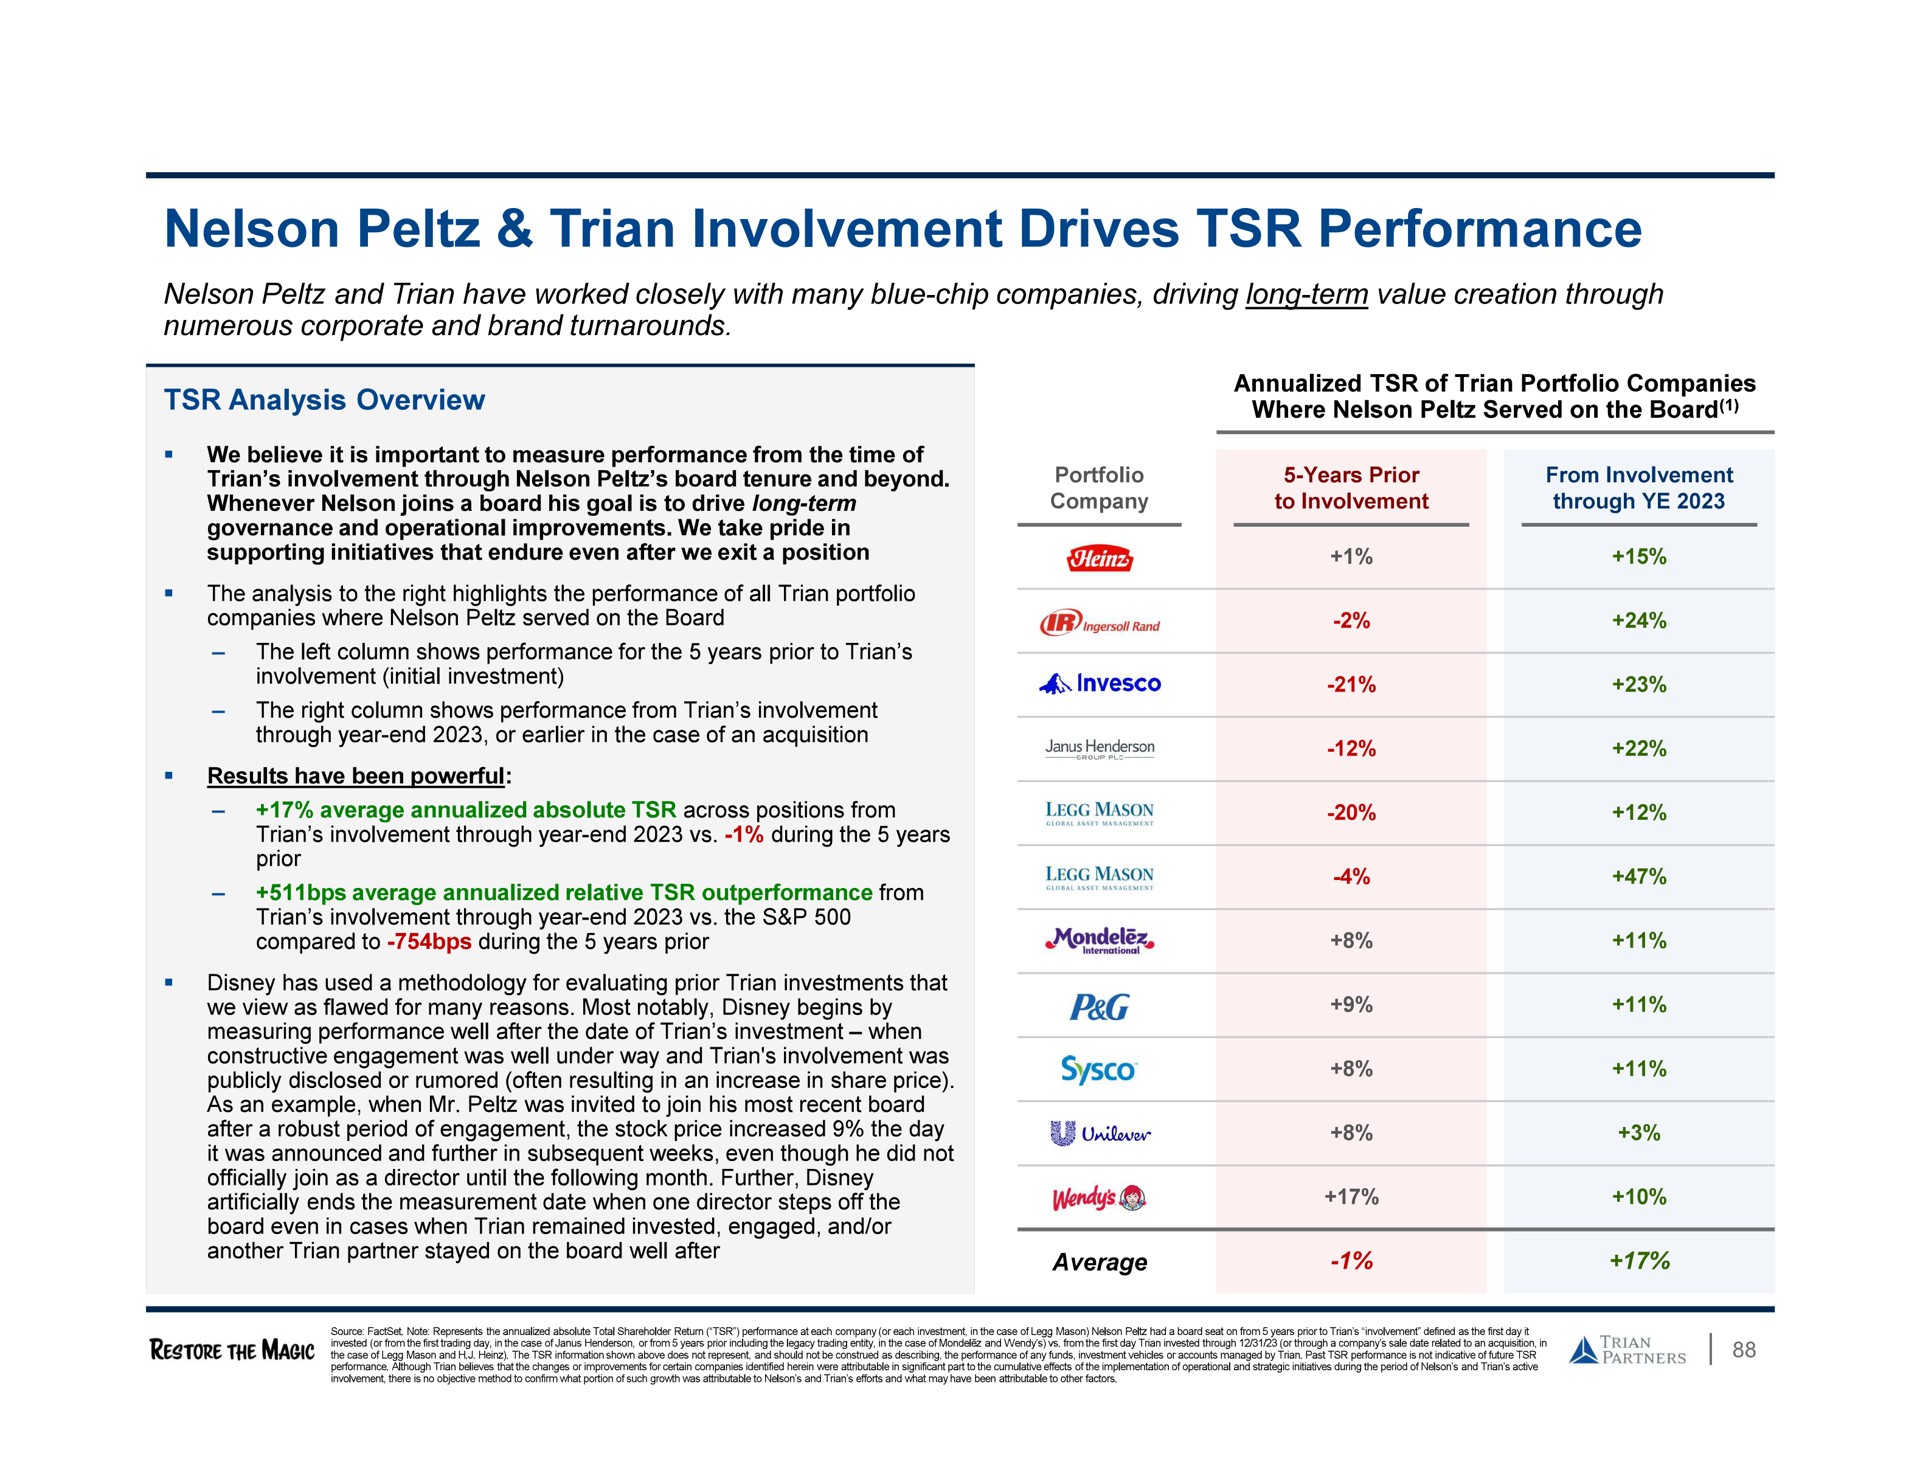 nelson involvement drives performance | Trian Partners